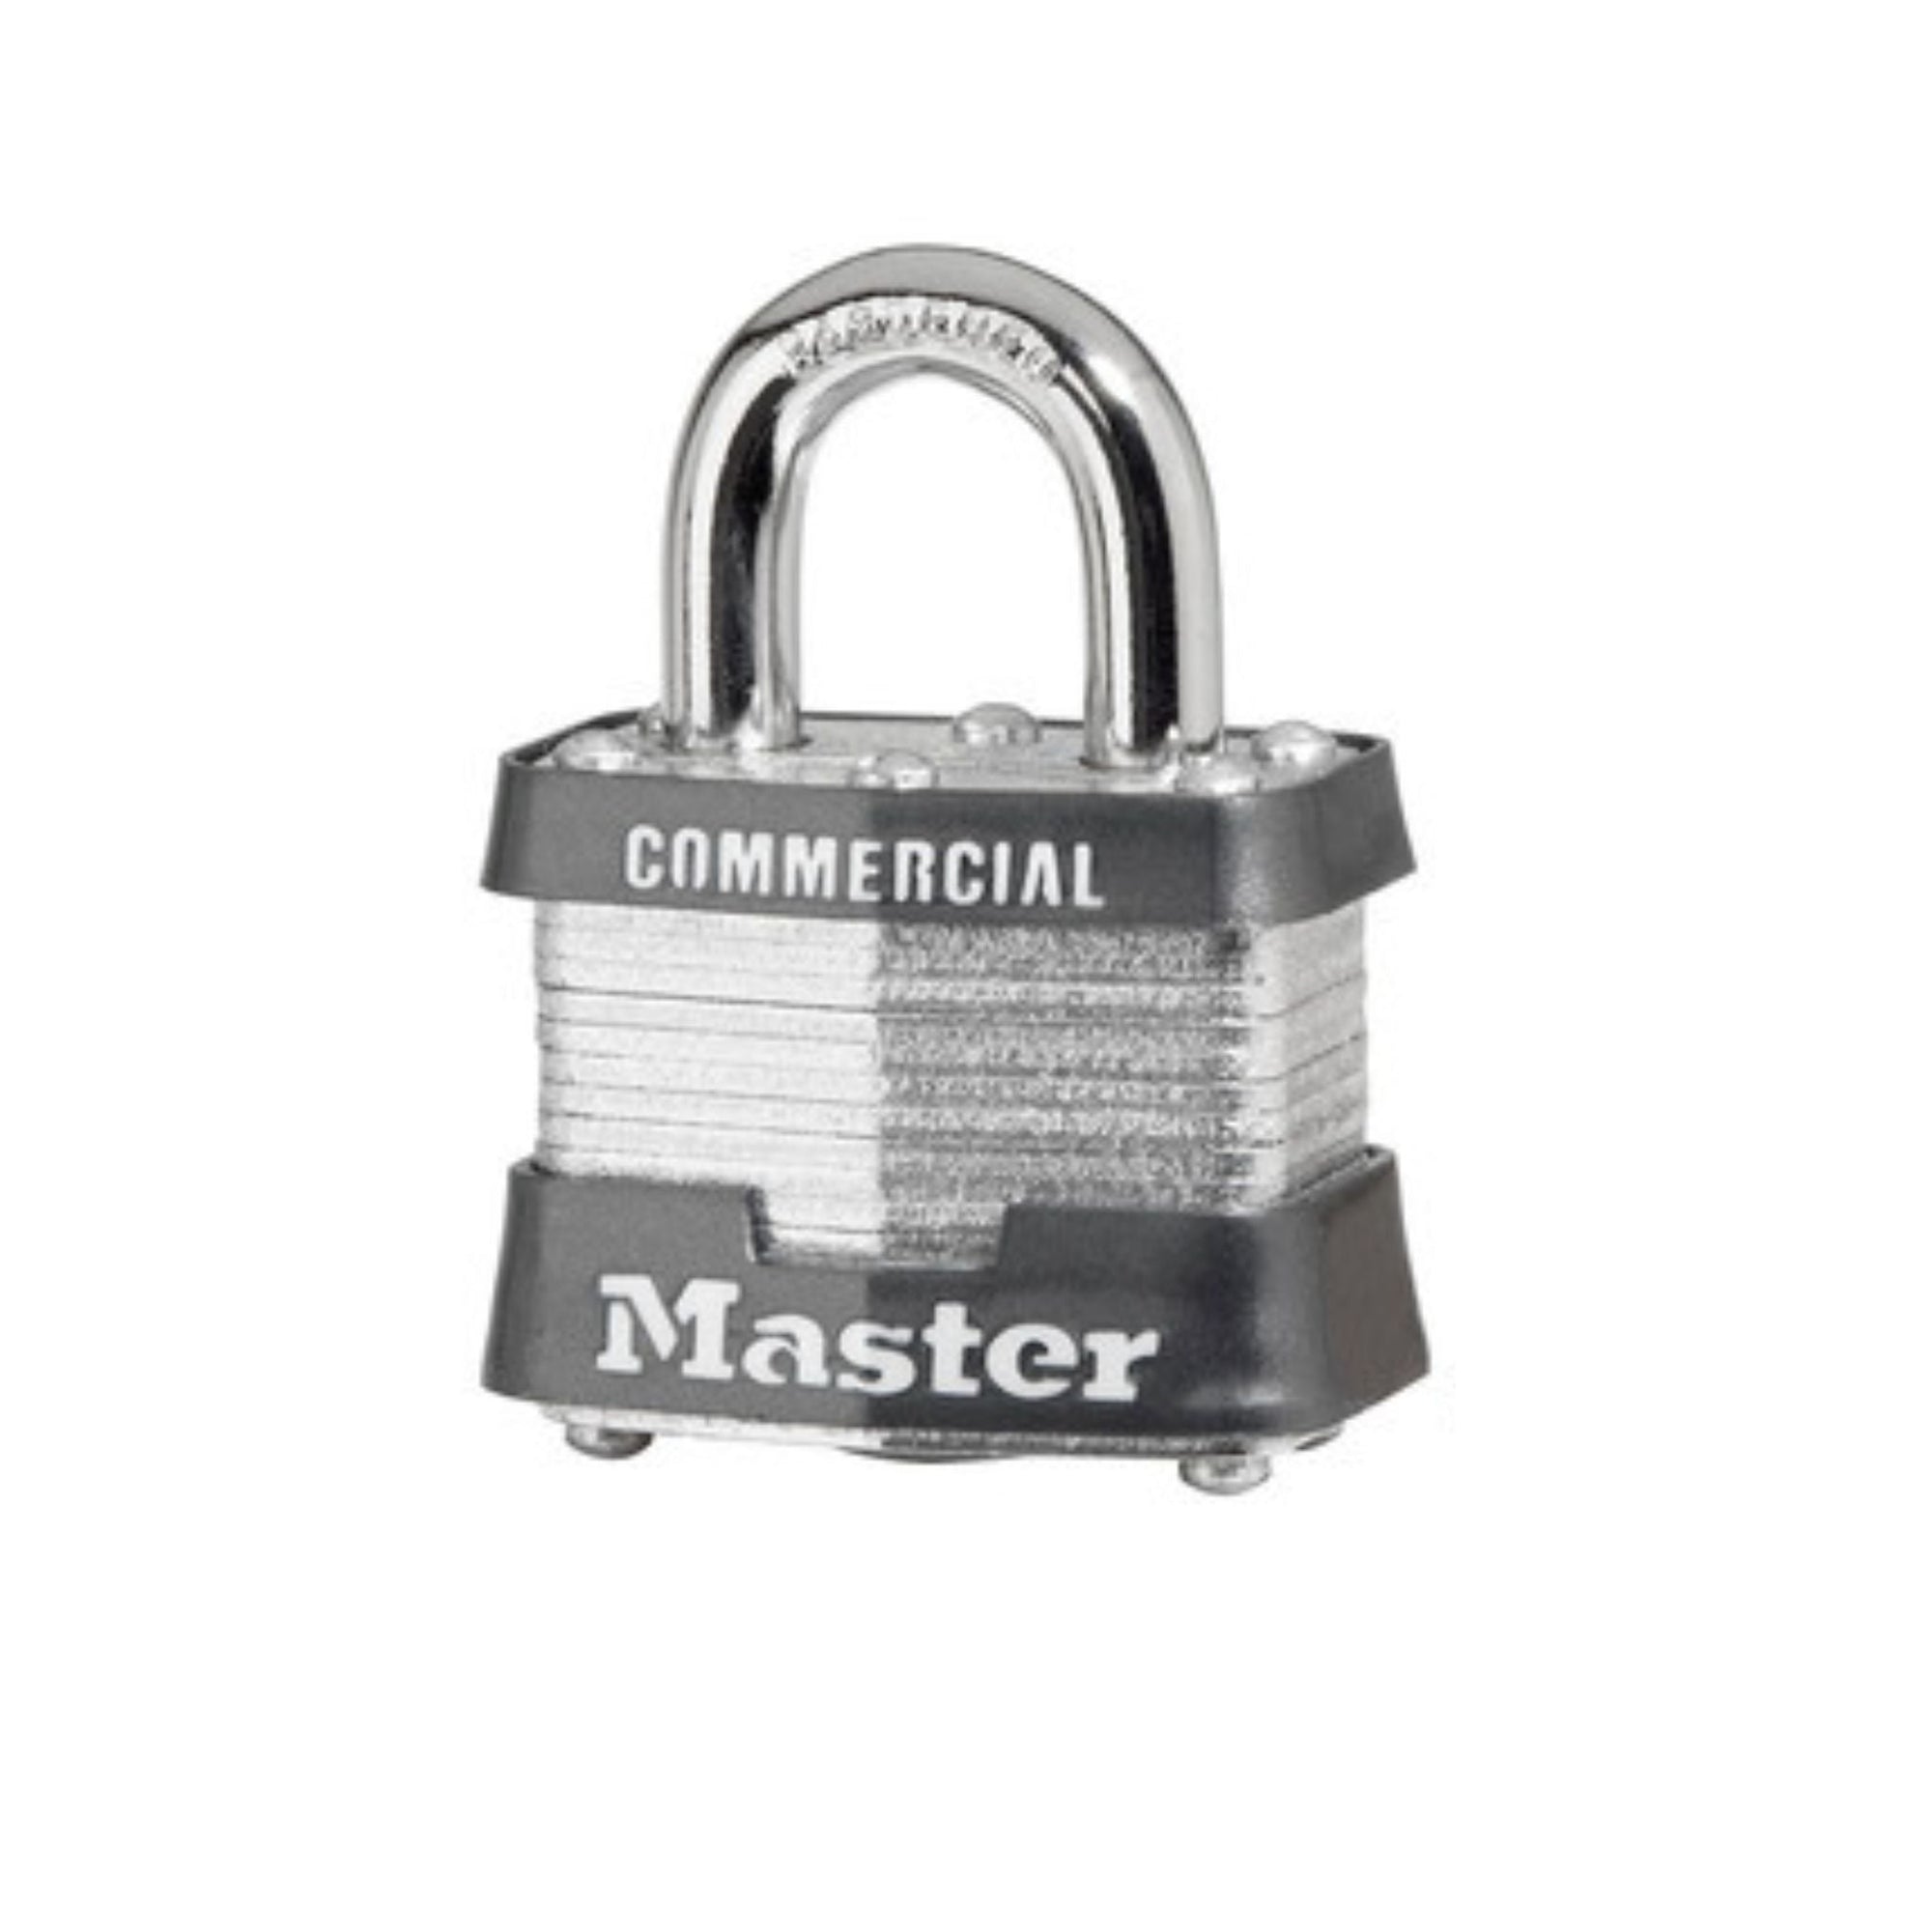 Master Lock 3KA 0303 Lock Laminated steel No. 3 Series Padlock Keyed to Match Existing Key Number KA0303 - The Lock Source